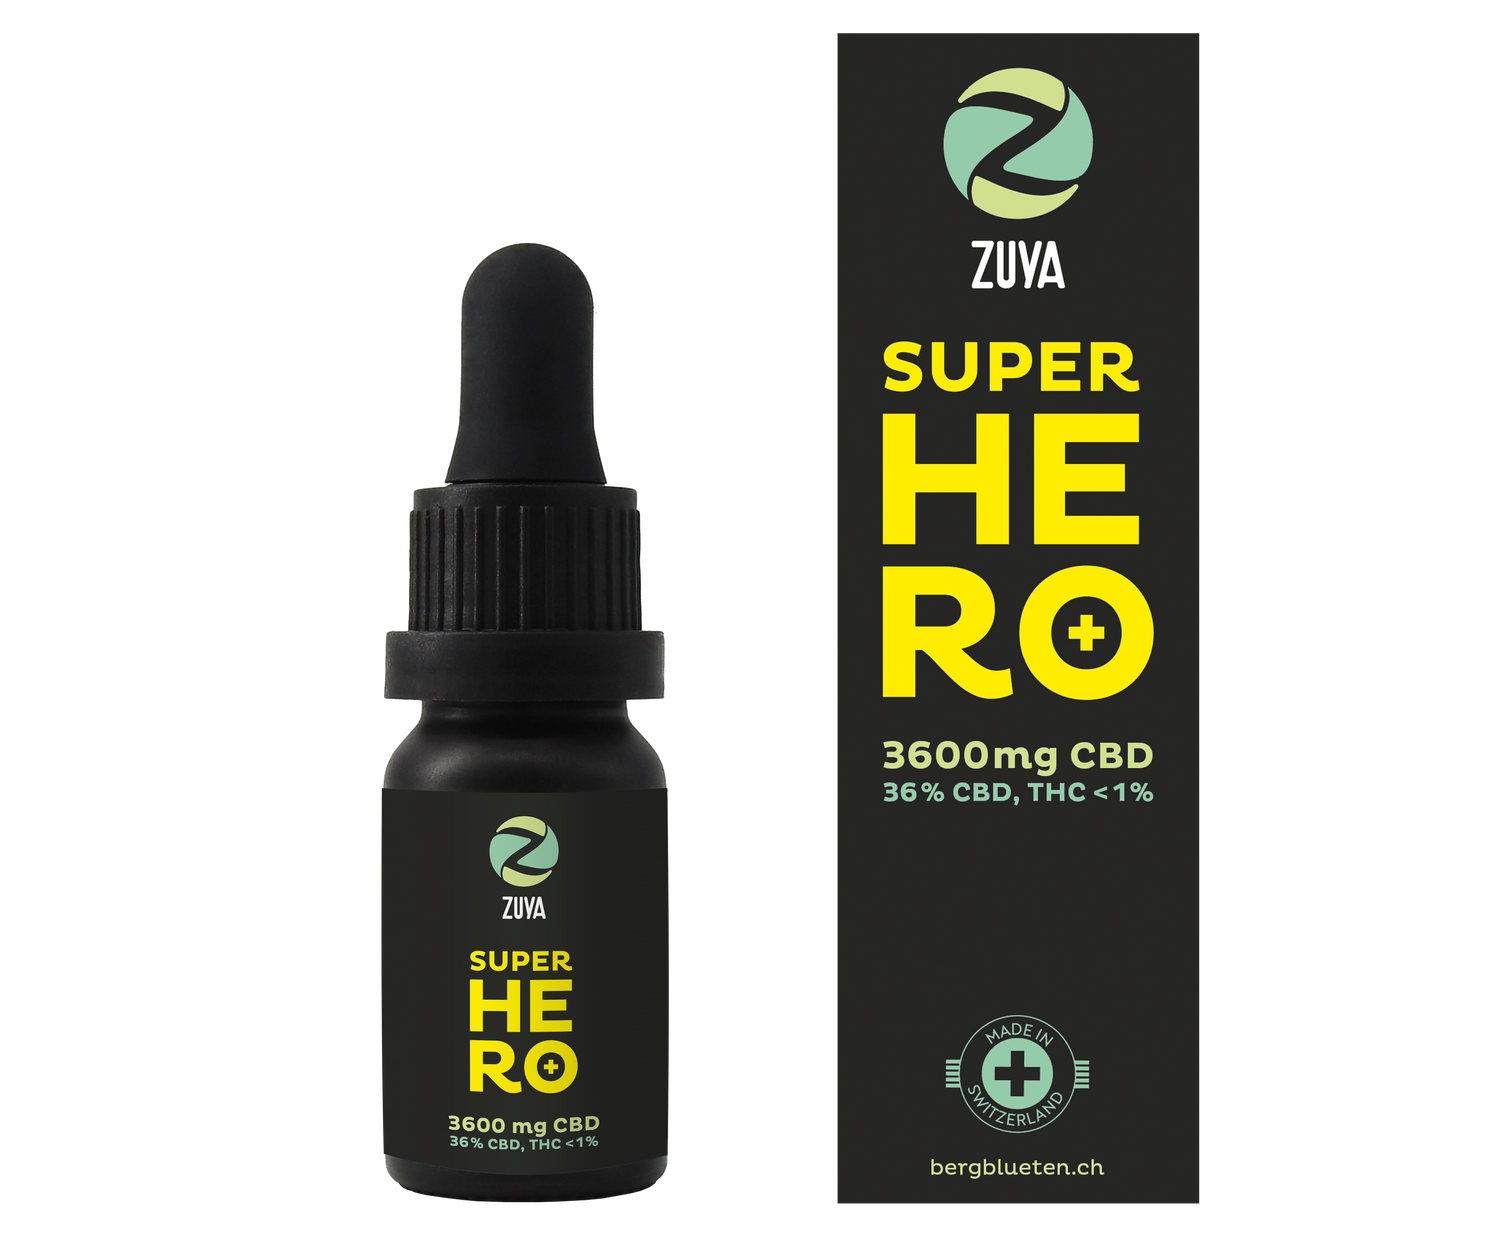 Zuya Super Hero 36% CBD fragrance oil